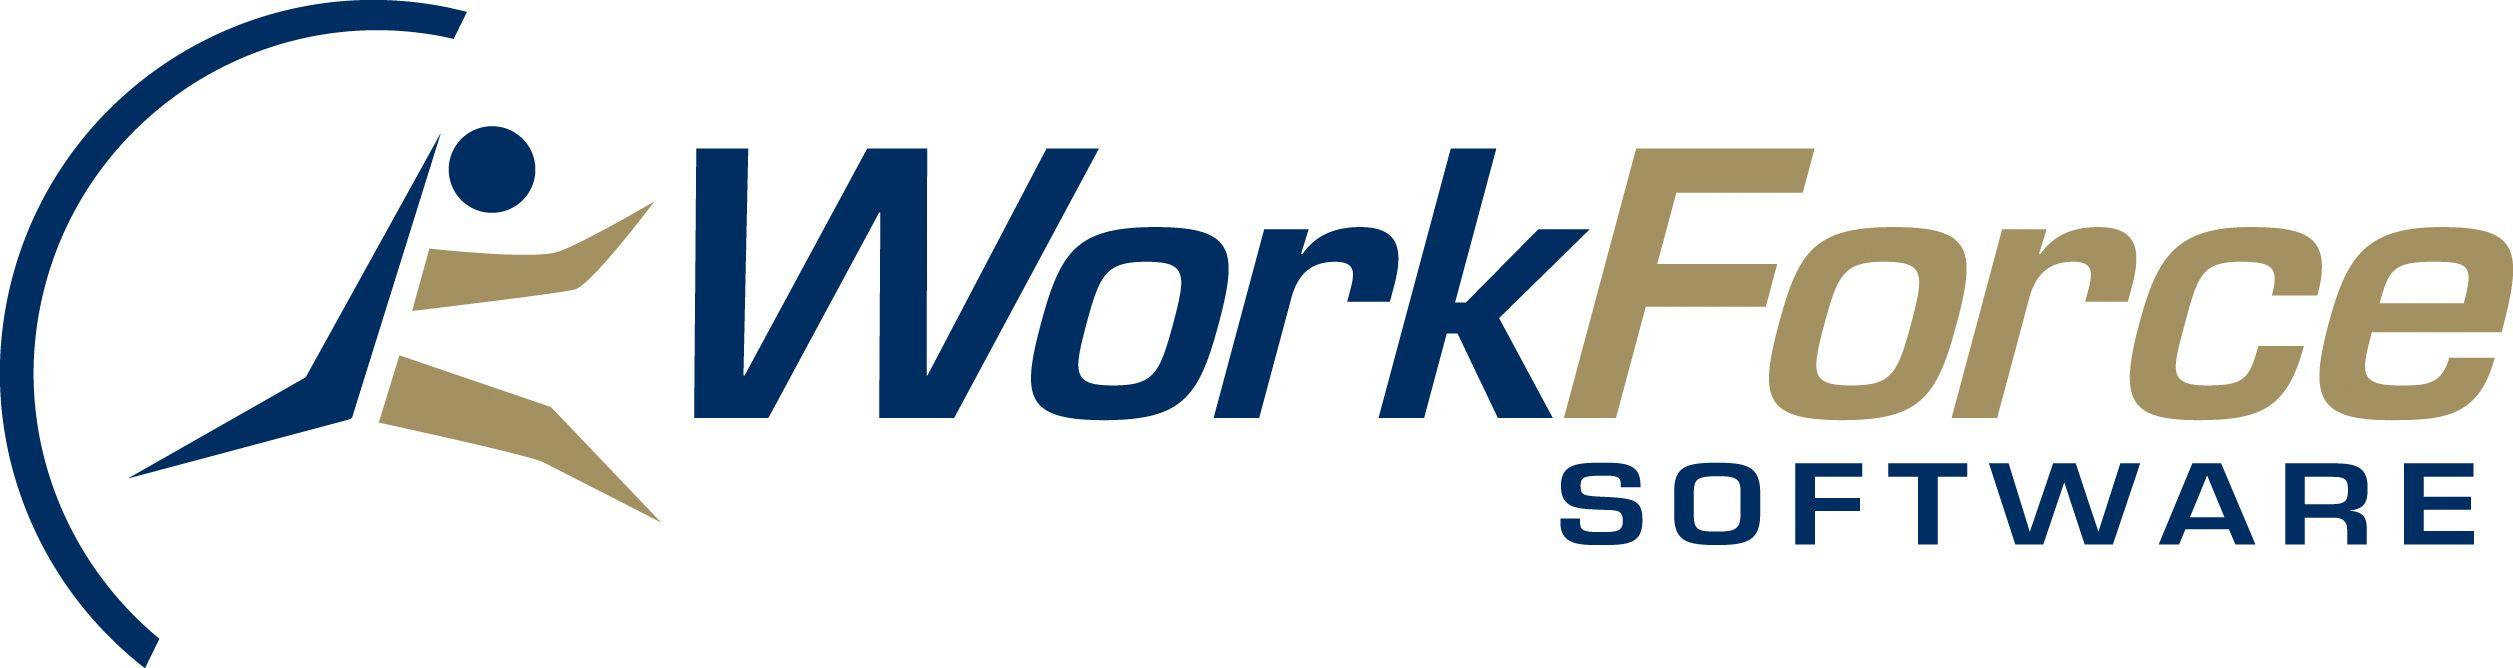 Workforce Logo - WorkForce Software, EPI-USE Partnership to Optimize Employers' HR ...